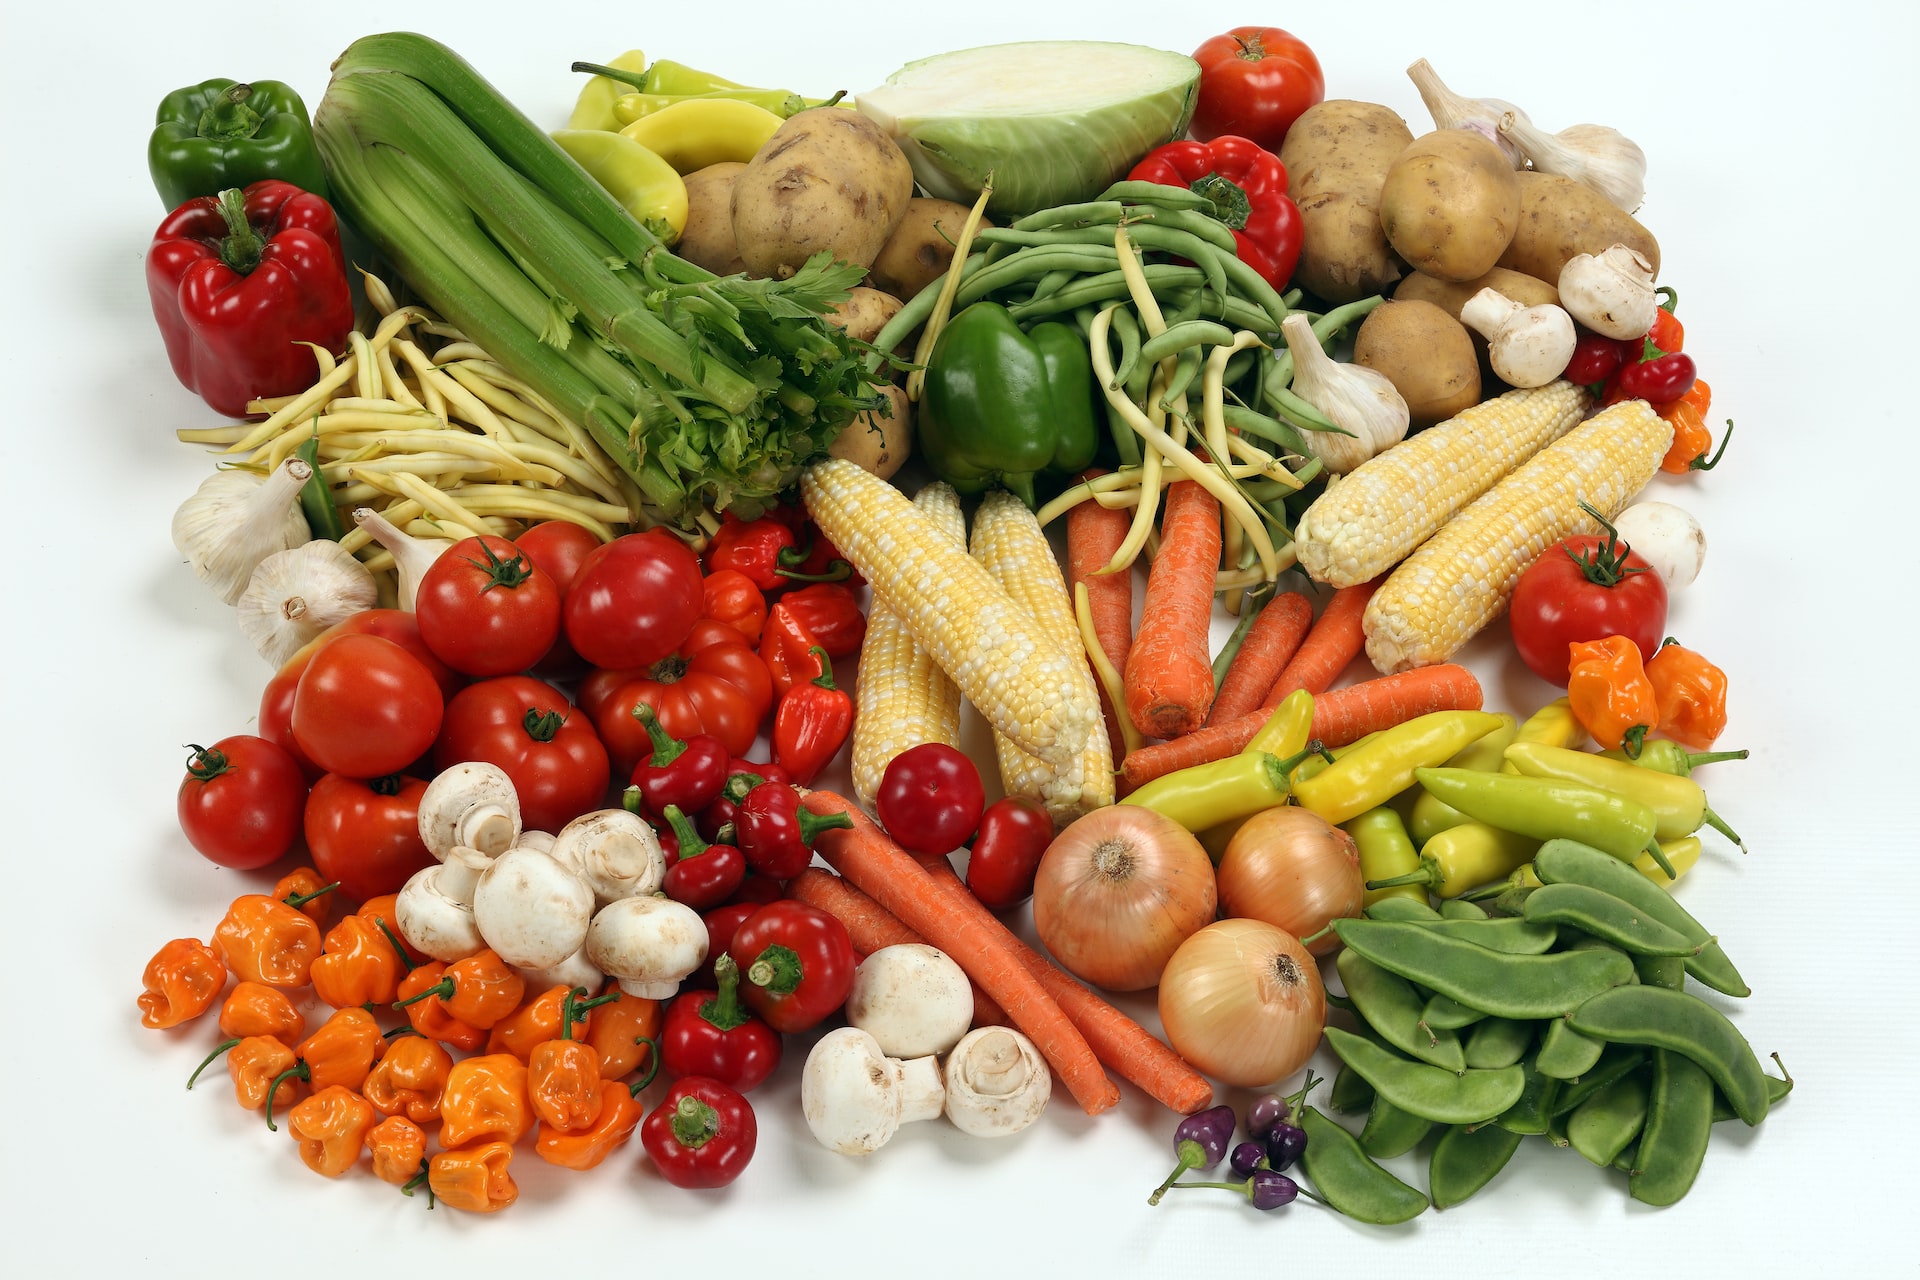 Vegetables and a flexitarian diet